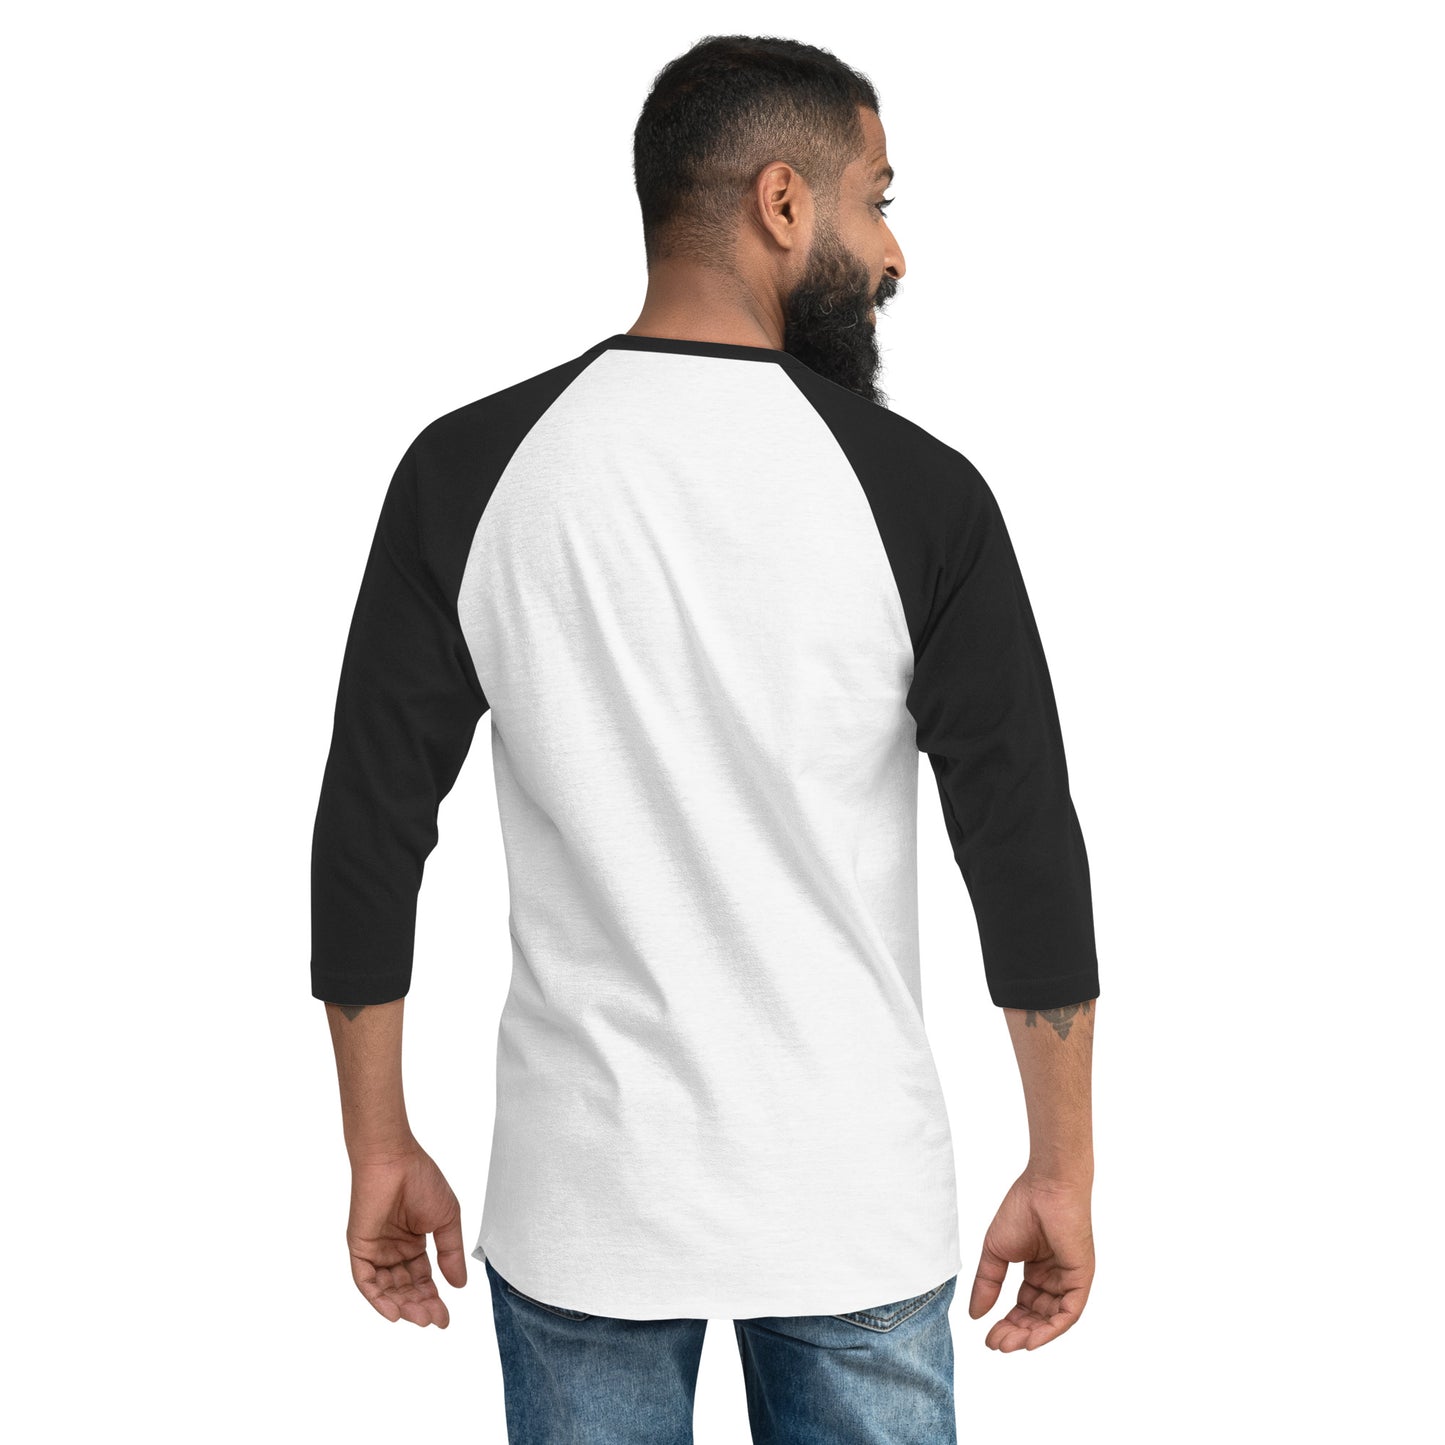 'Surrender' 3/4 sleeve Raglan baseball T-shirt (unisex)